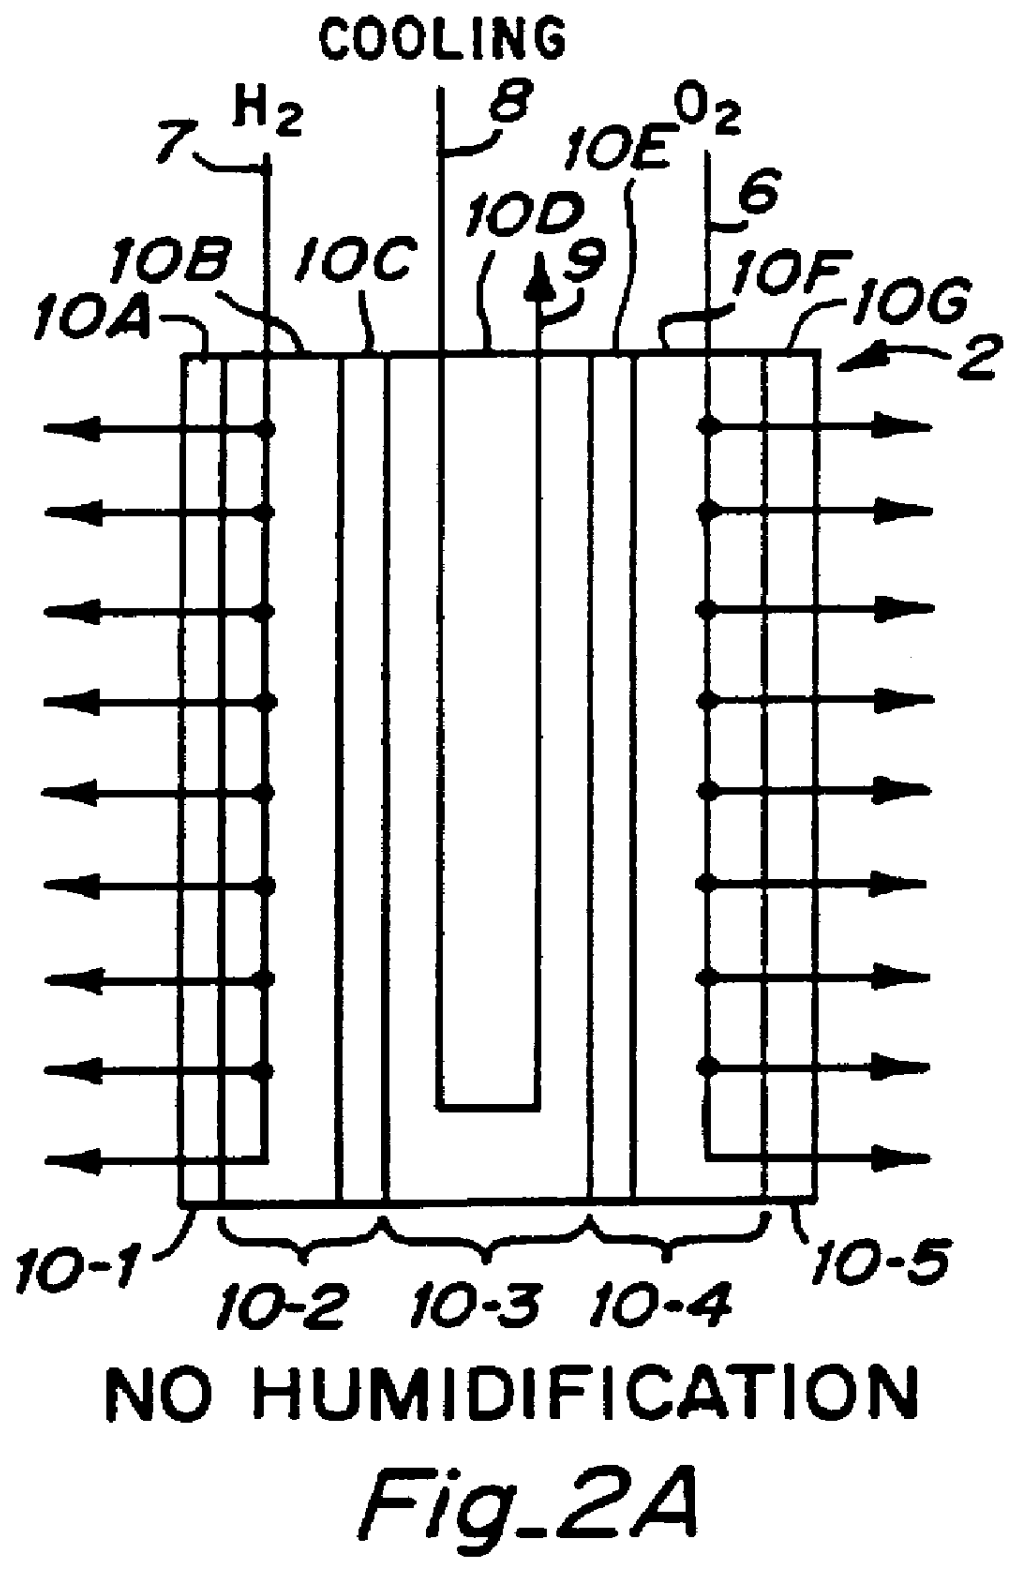 Fuel cell platelet separators having coordinate features